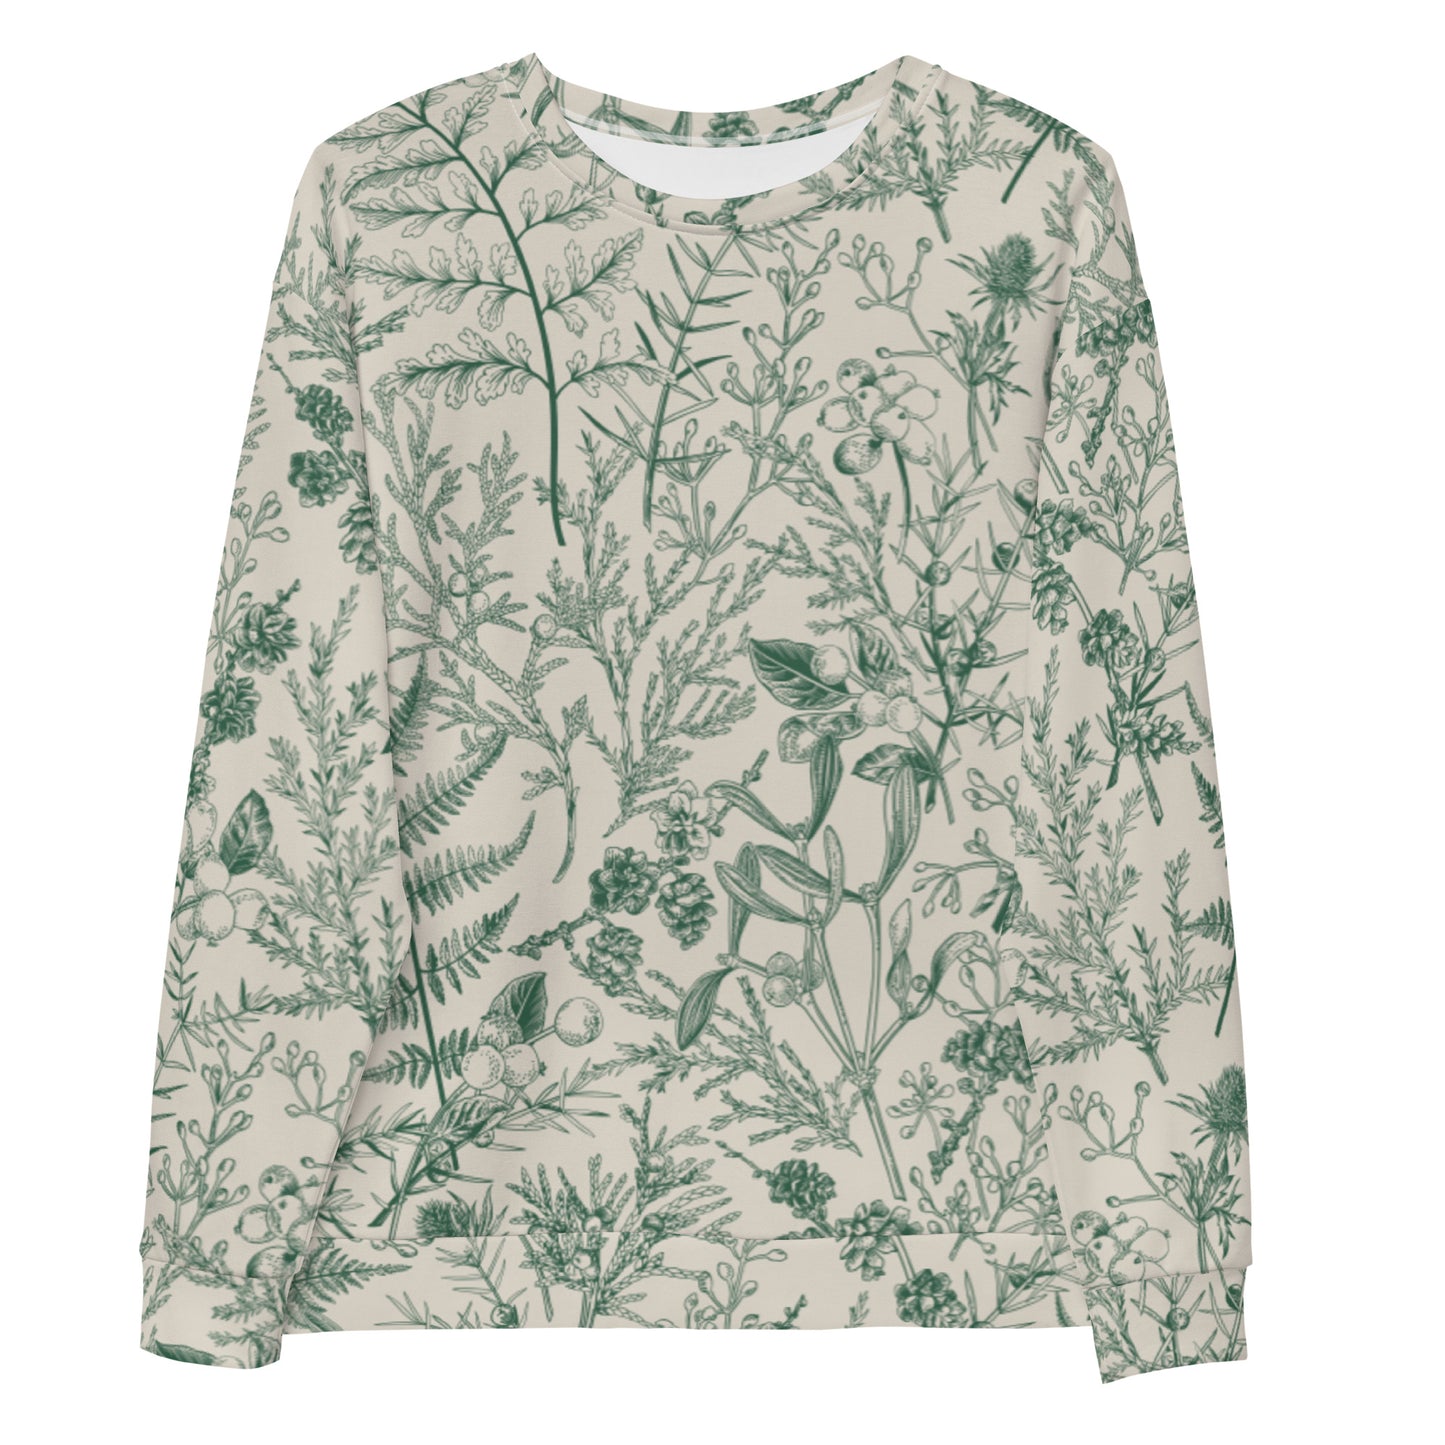 Metsä (Forest) - Unisex Sweatshirt - Long Sleeve- Print N Stuff - [designed in Turku FInland]